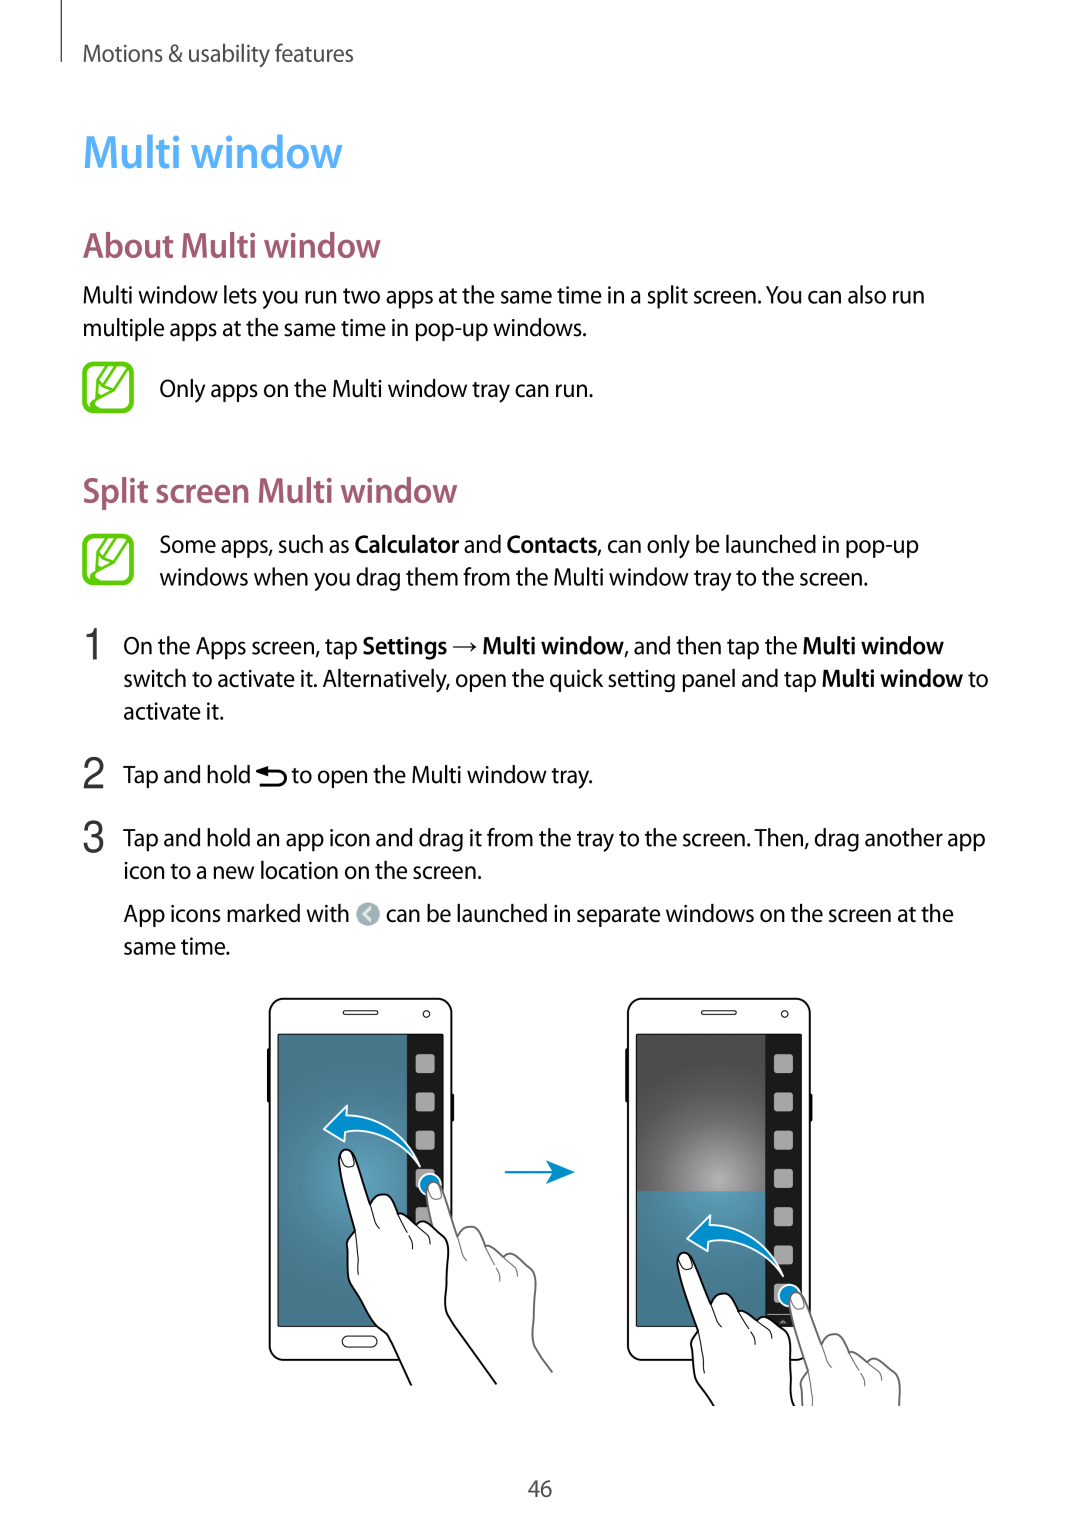 Samsung SM-A700FZWACYO, SM-A700FZKADBT About Multi window, Split screen Multi window, Motions & usability features 